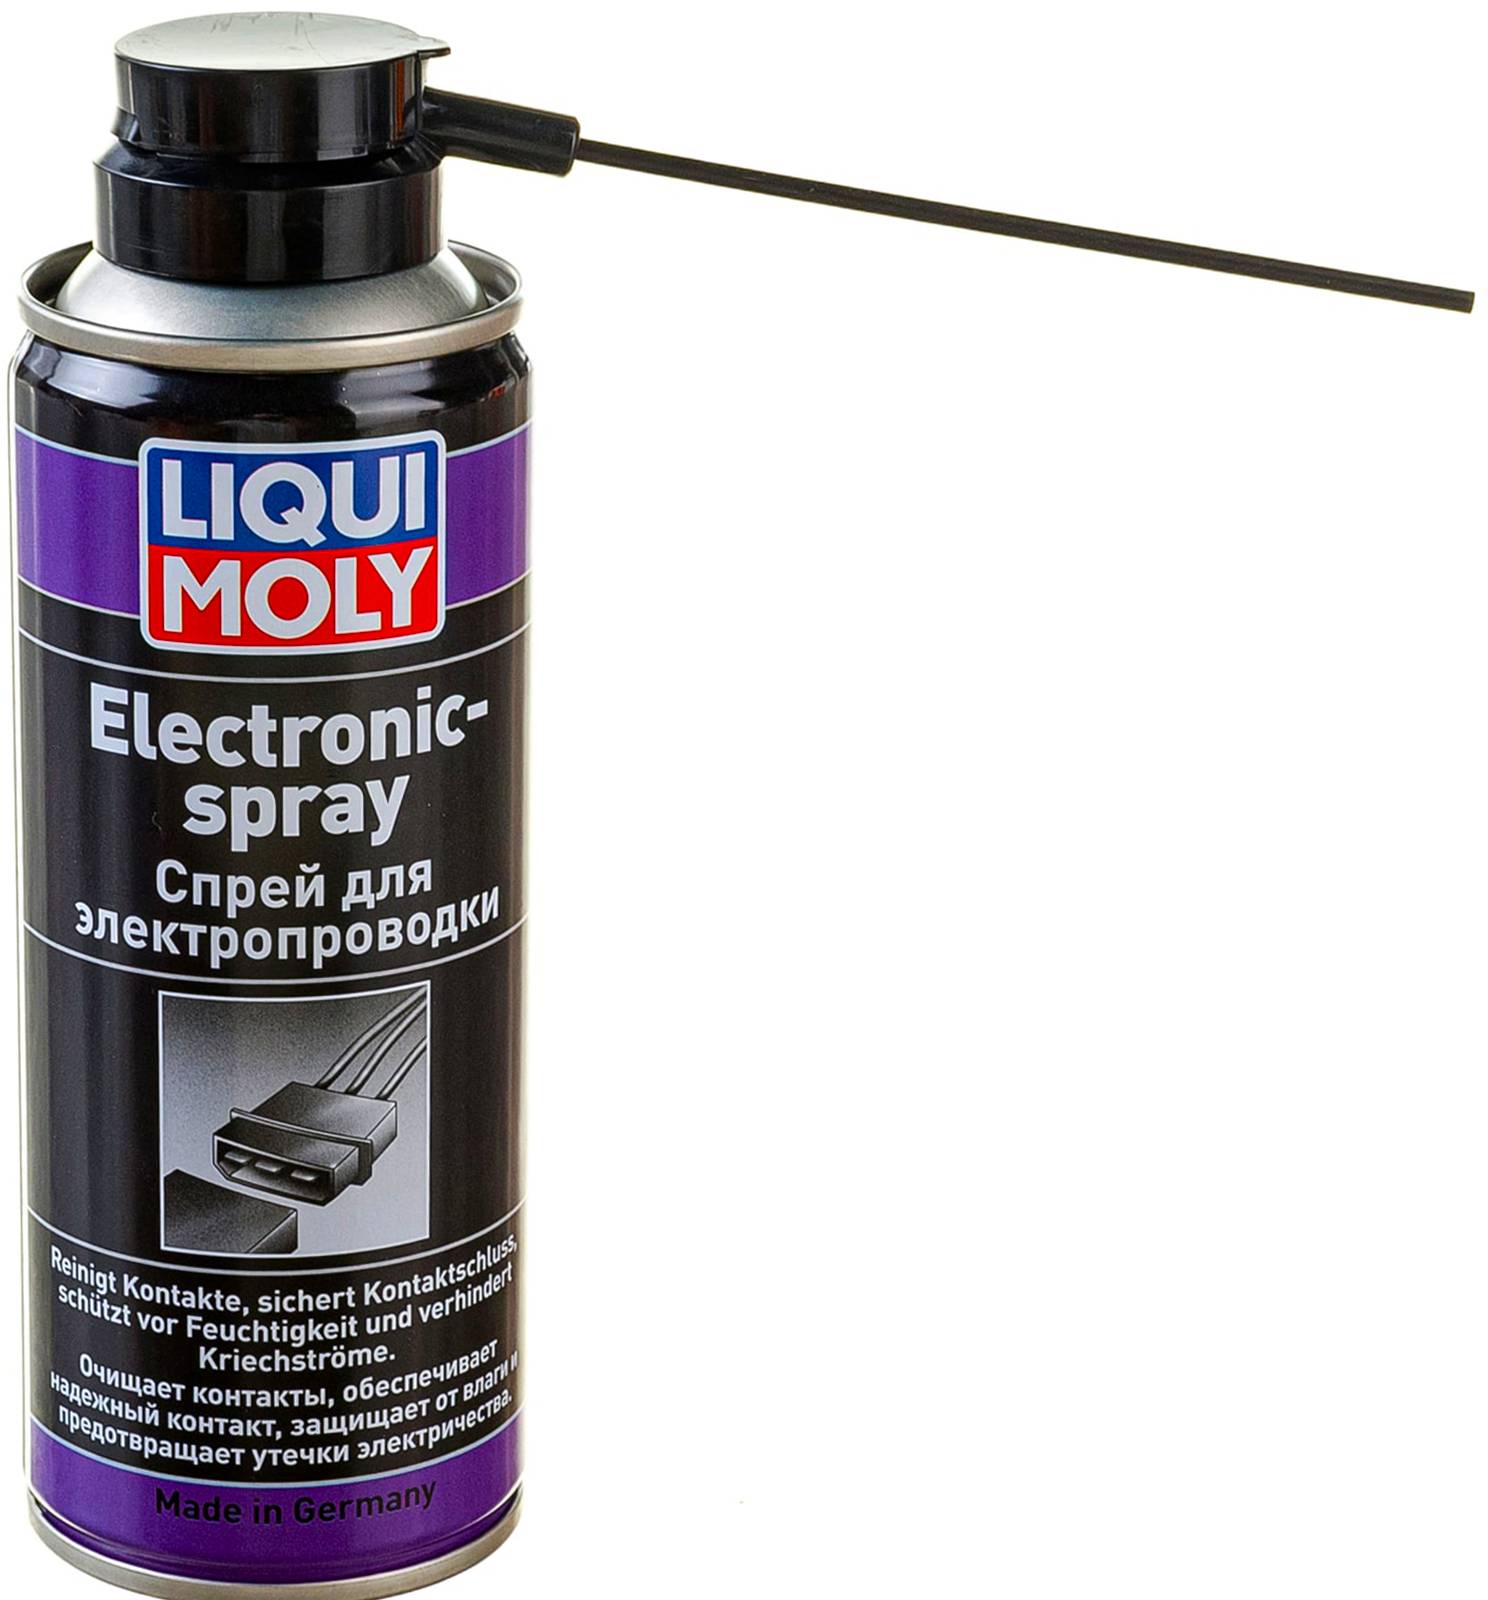 Спрей для электропроводки Liqui Moly Electronic-Spray 0,2л